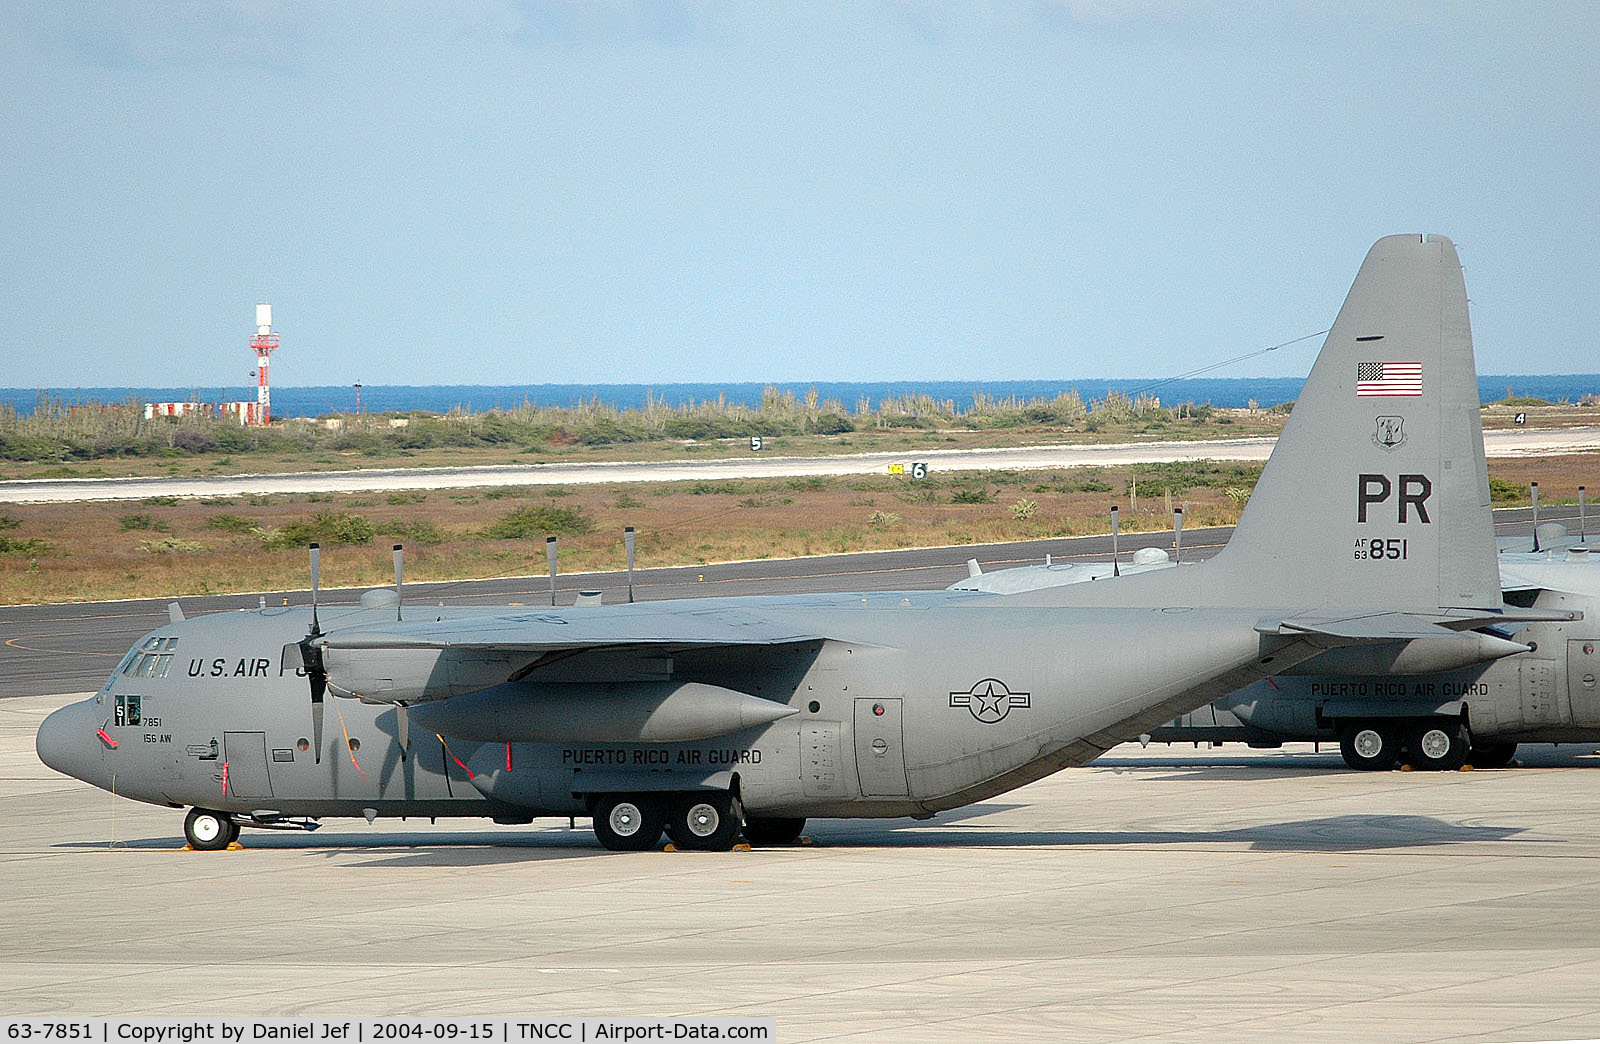 63-7851, 1982 Lockheed C-130E Hercules C/N 382-3921, puerto rico air guard resting at the FOL base